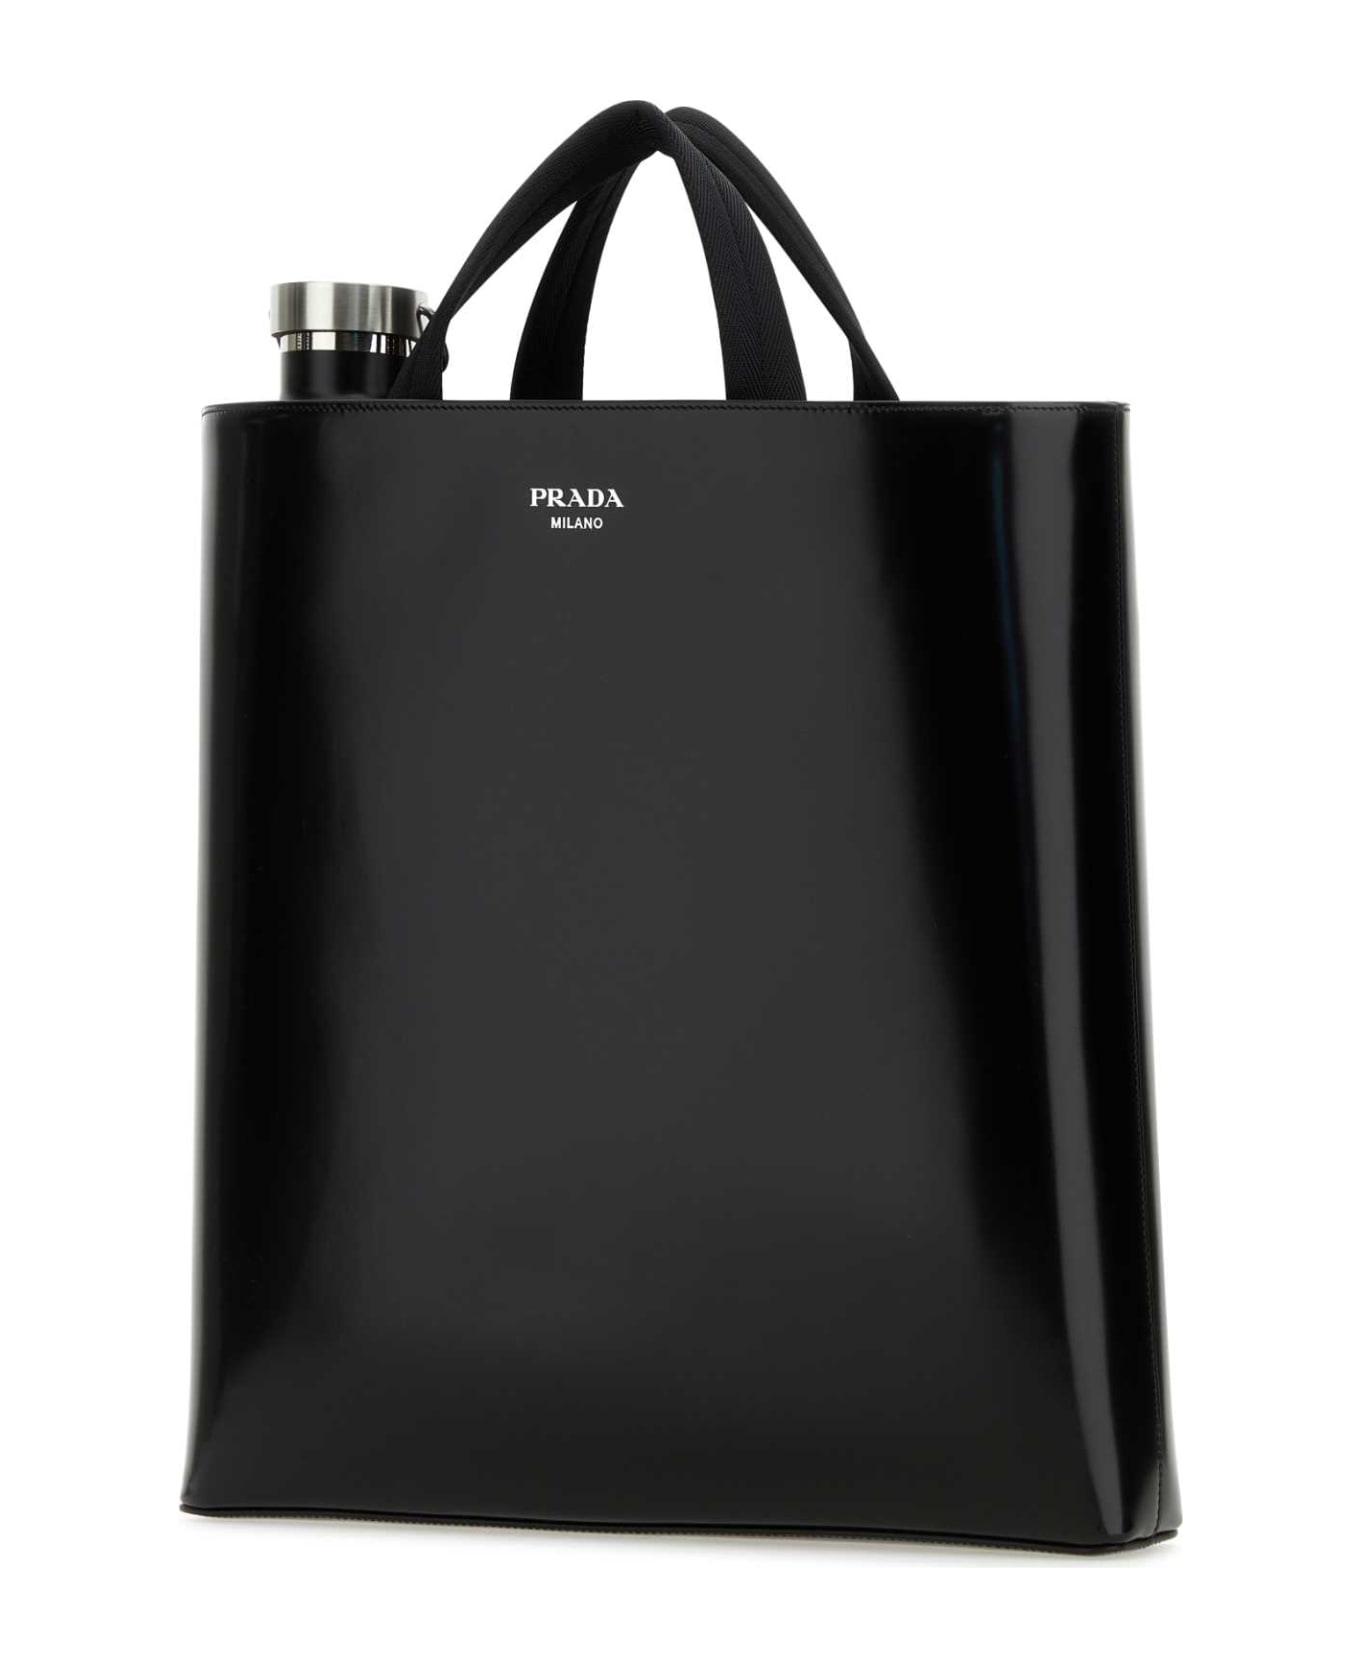 Prada Black Leather Shopping Bag - NERO